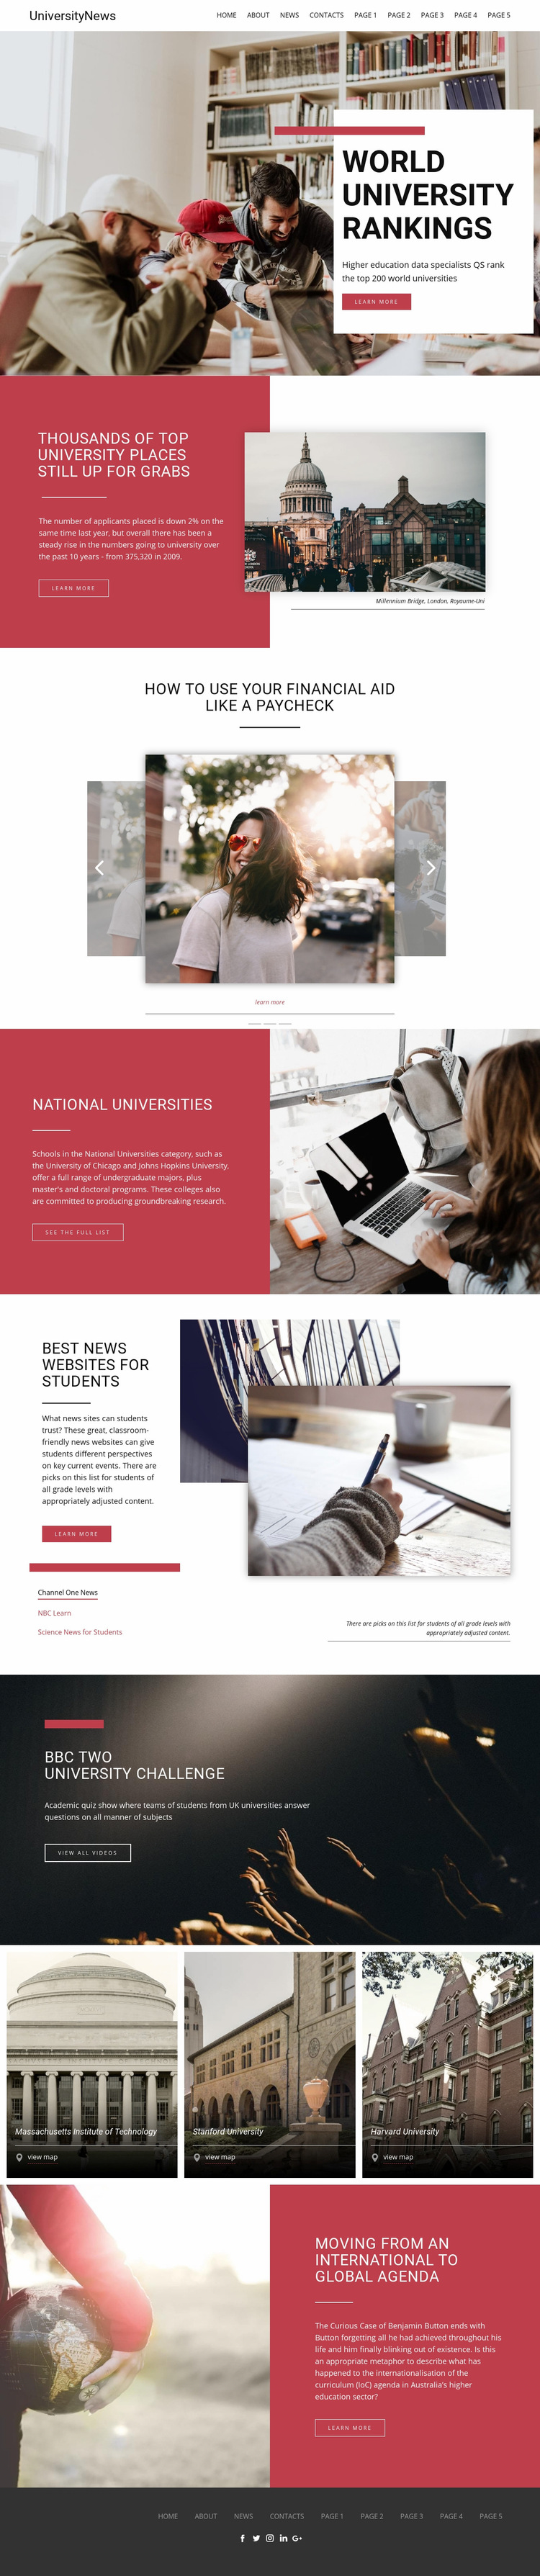 Ranking university education Web Page Design